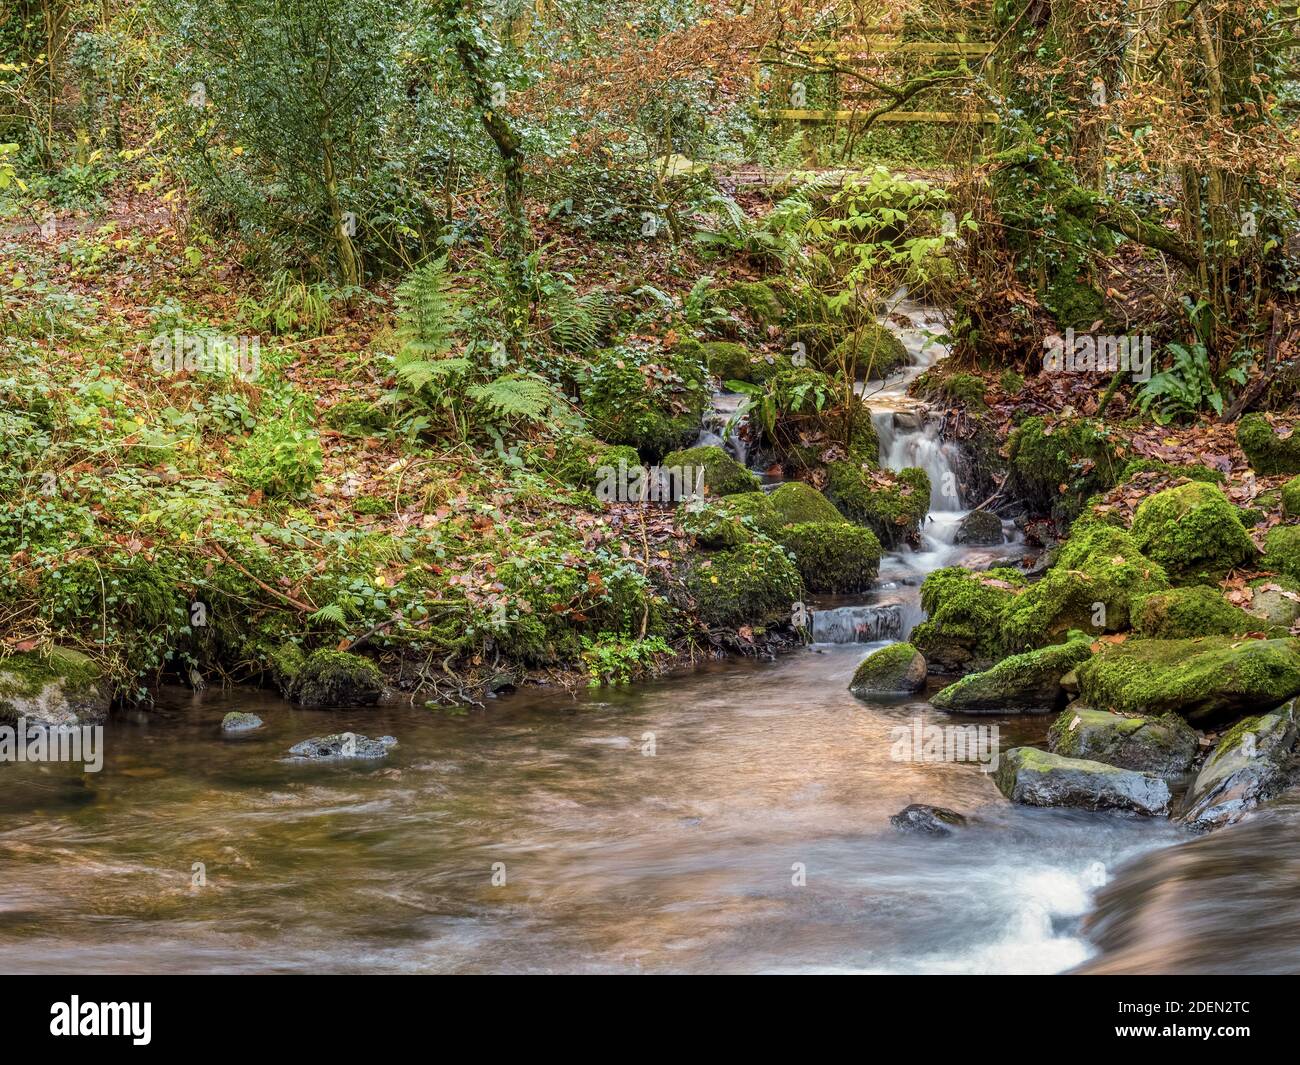 East Okement River tributary, Fatherford, Devon. Autumn. Stock Photo